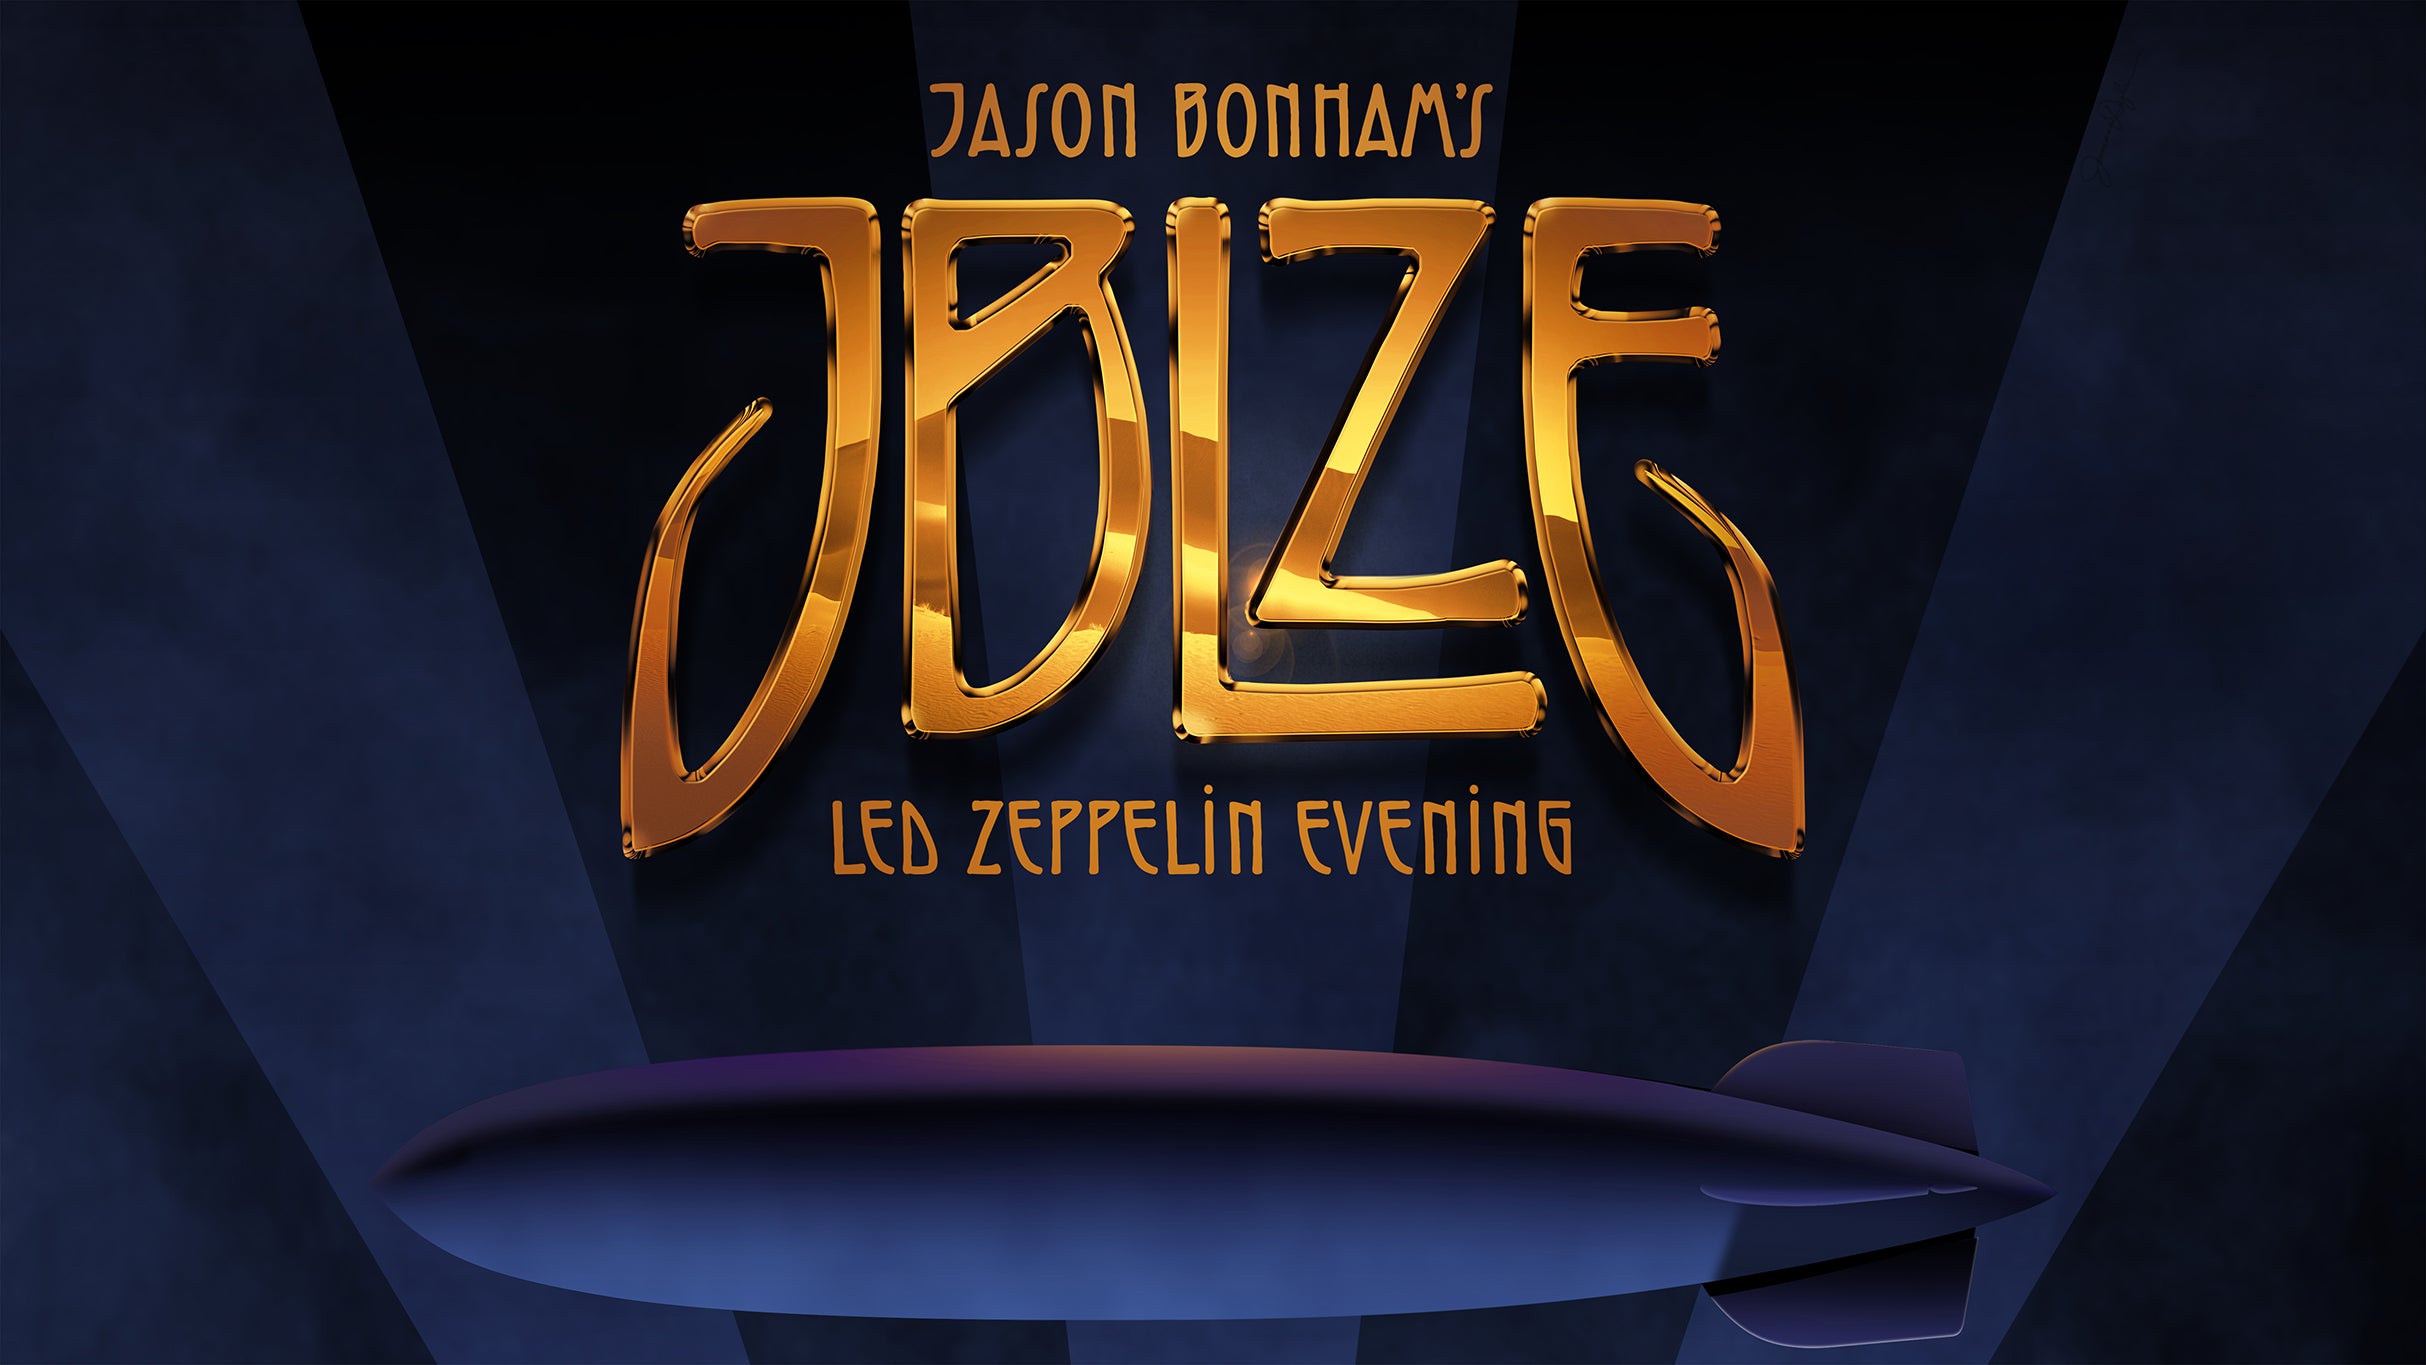 Jason Bonham's Led Zeppelin Evening With Jager Henry presale code